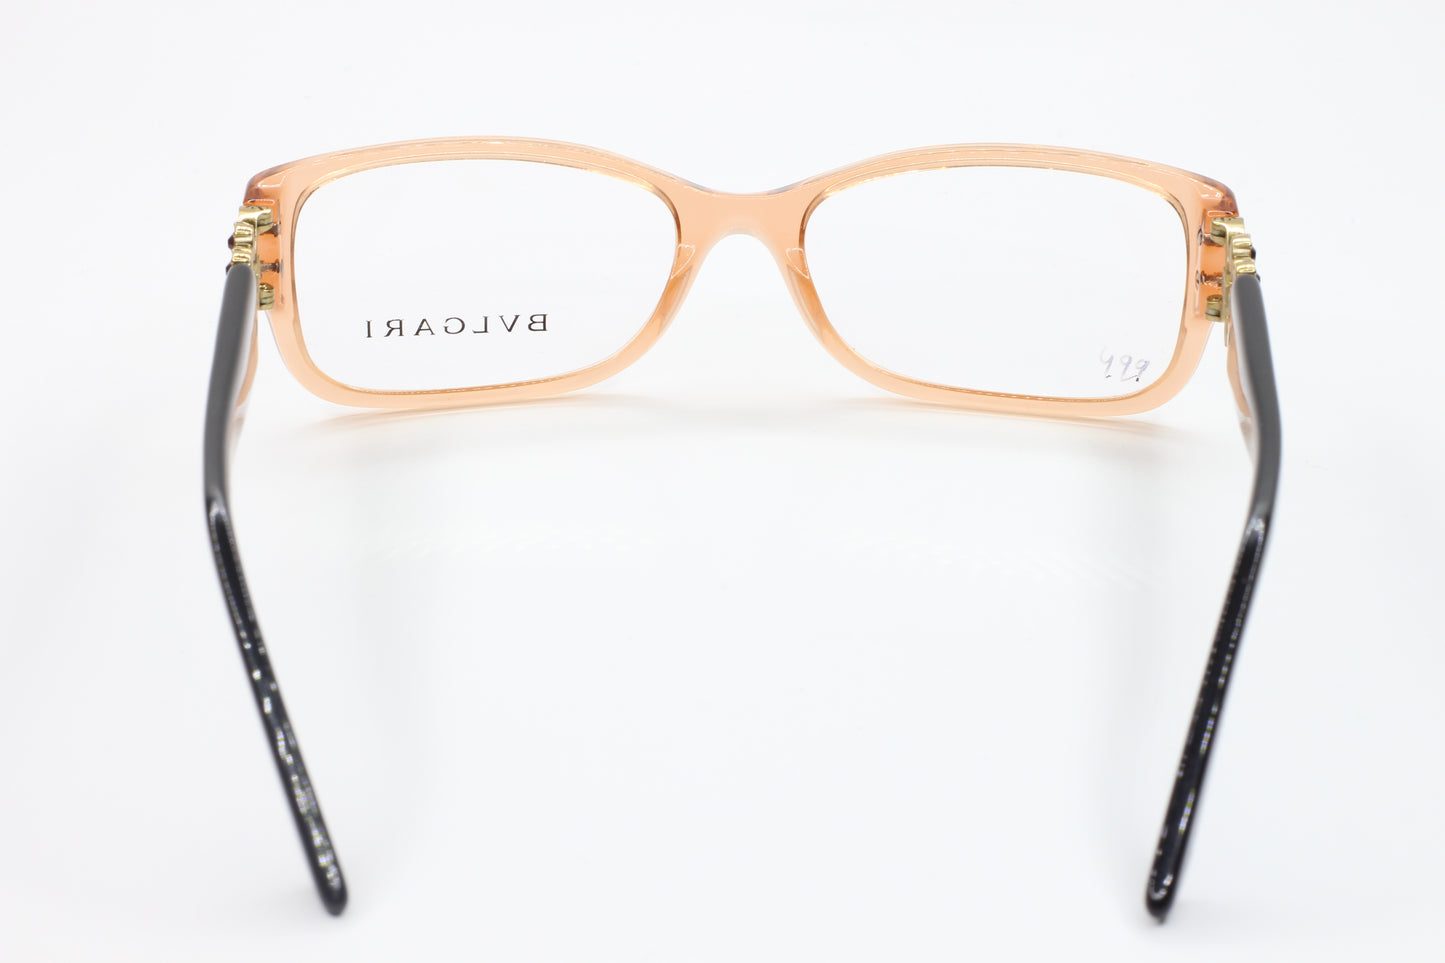 BVLGARI BV4067B 5060 Brown Swarovski Crystal Luxury Eyeglasses - Eyeglasses, Woman, Women